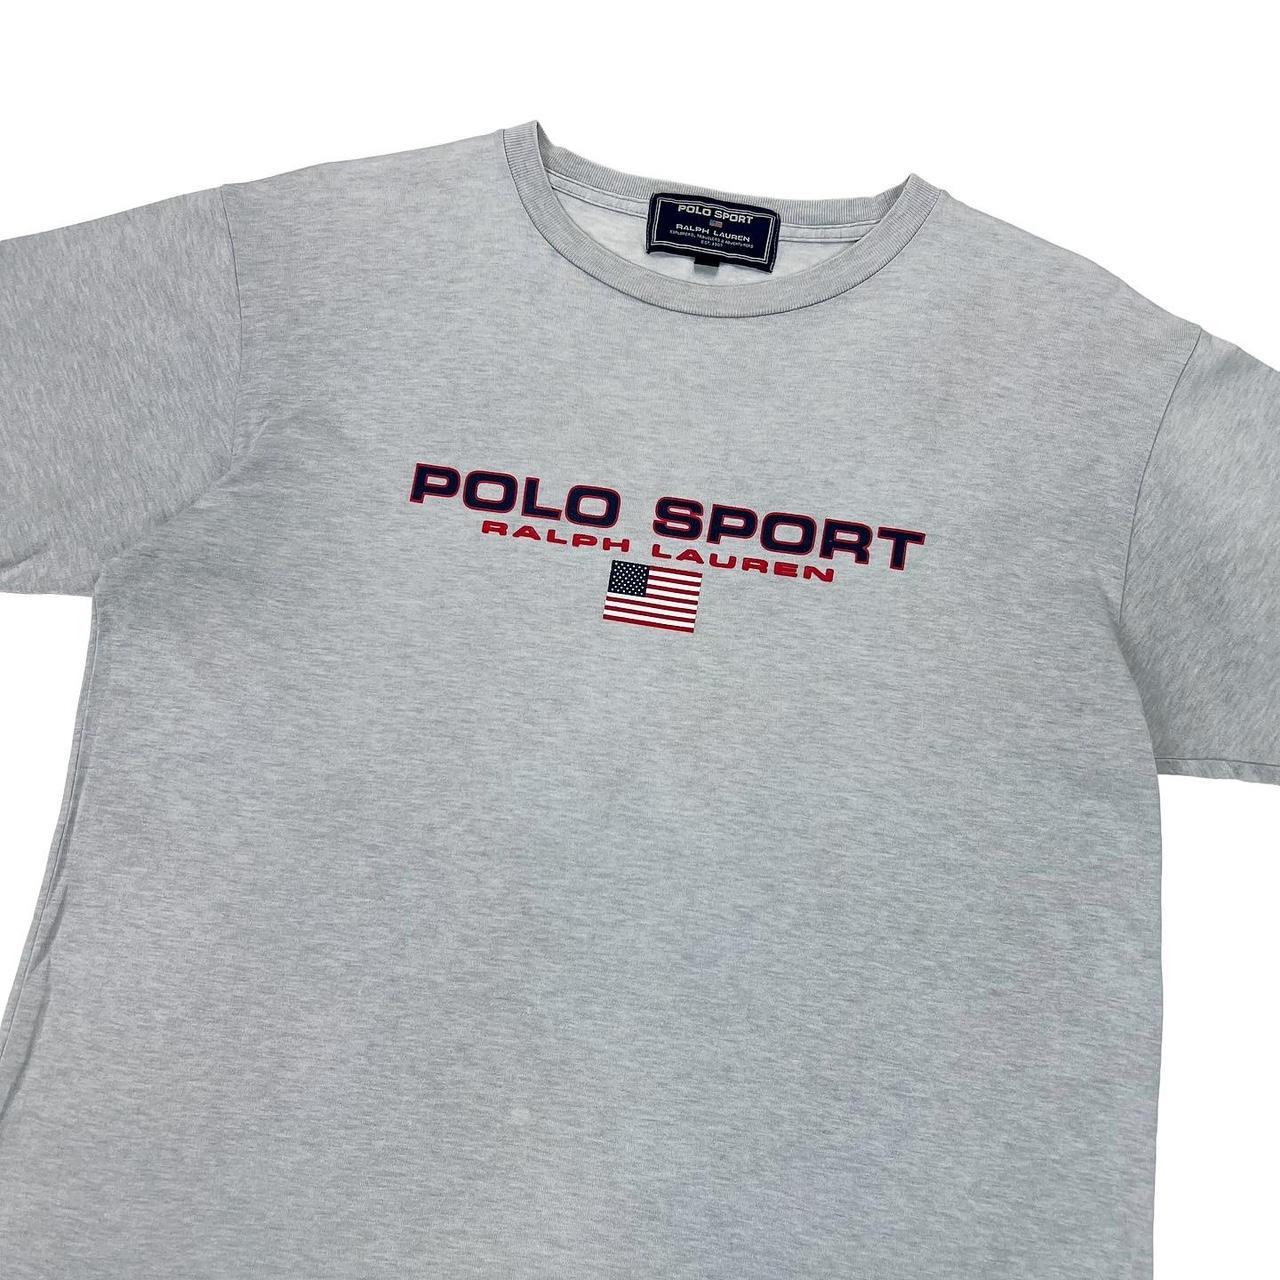 Polo Sport Men's Grey T-shirt | Depop